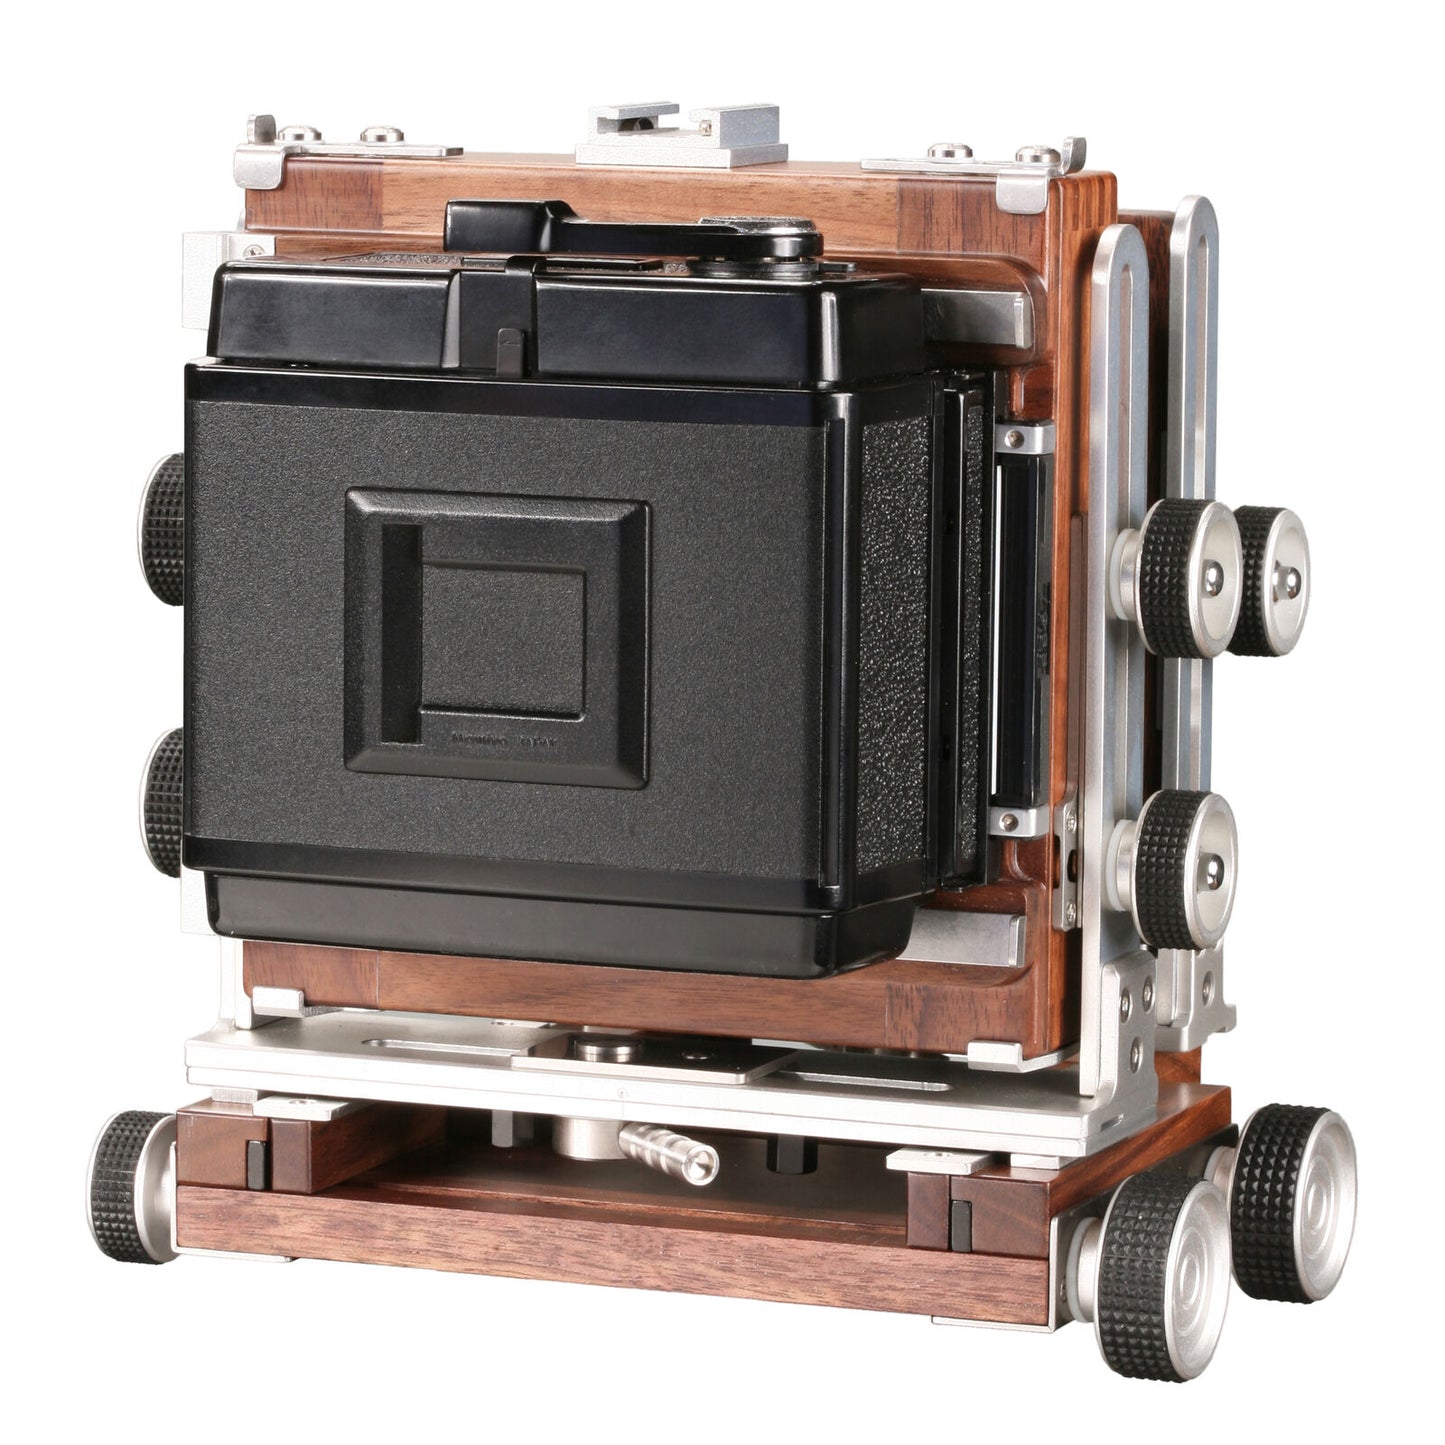 Shen Hao TFC69-A 6x9cm Medium Format Camera Black Walnut Wood Bellows Lens Board